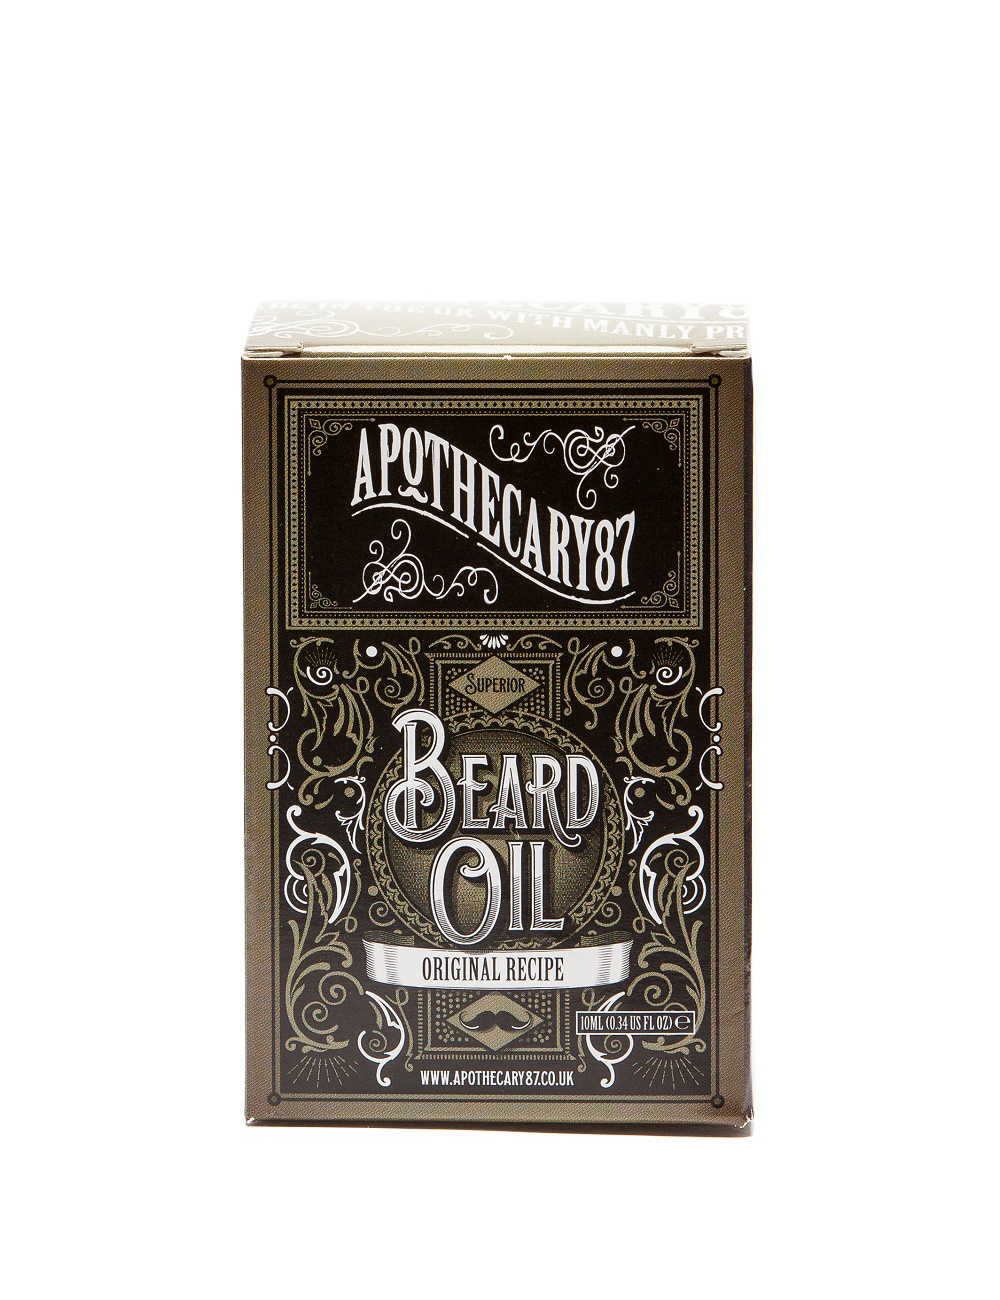 Apothecary 87 Beard Oil Original Recipe 10ml Small 2